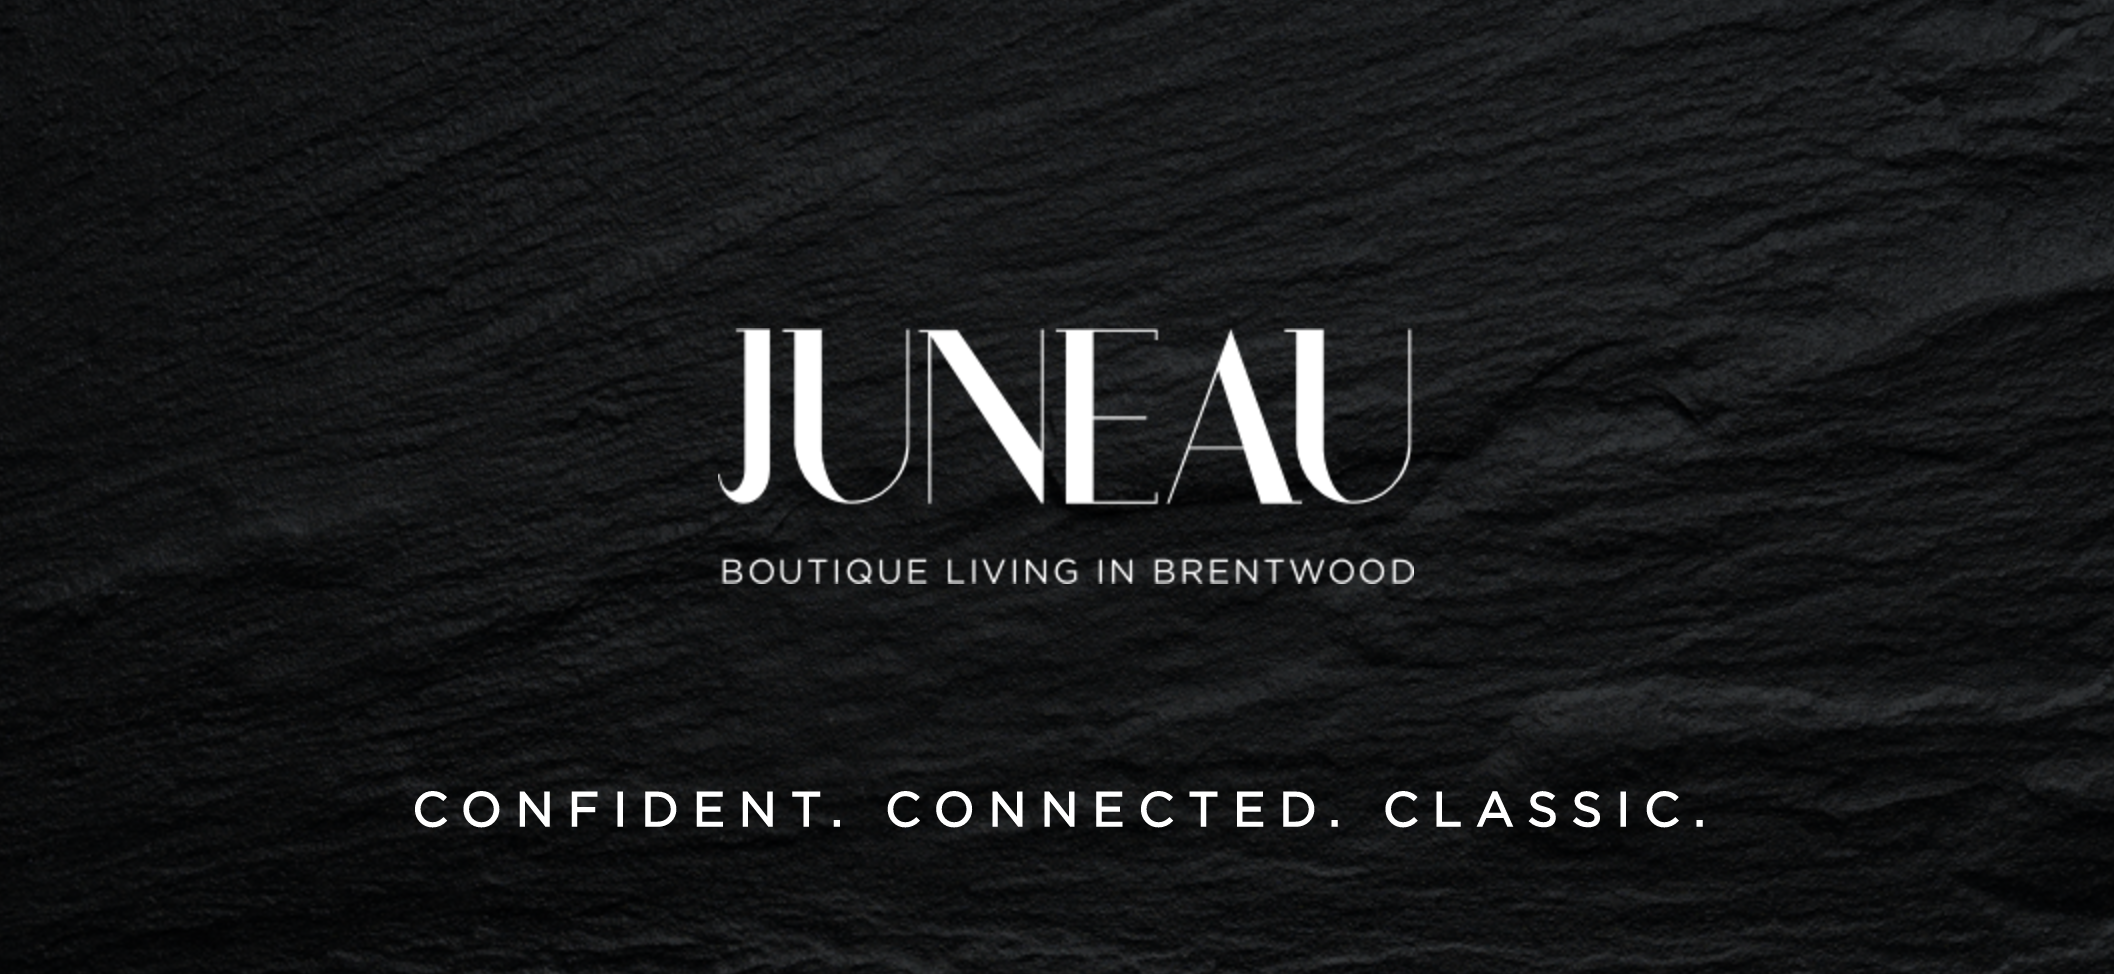 Juneau brentwood condos